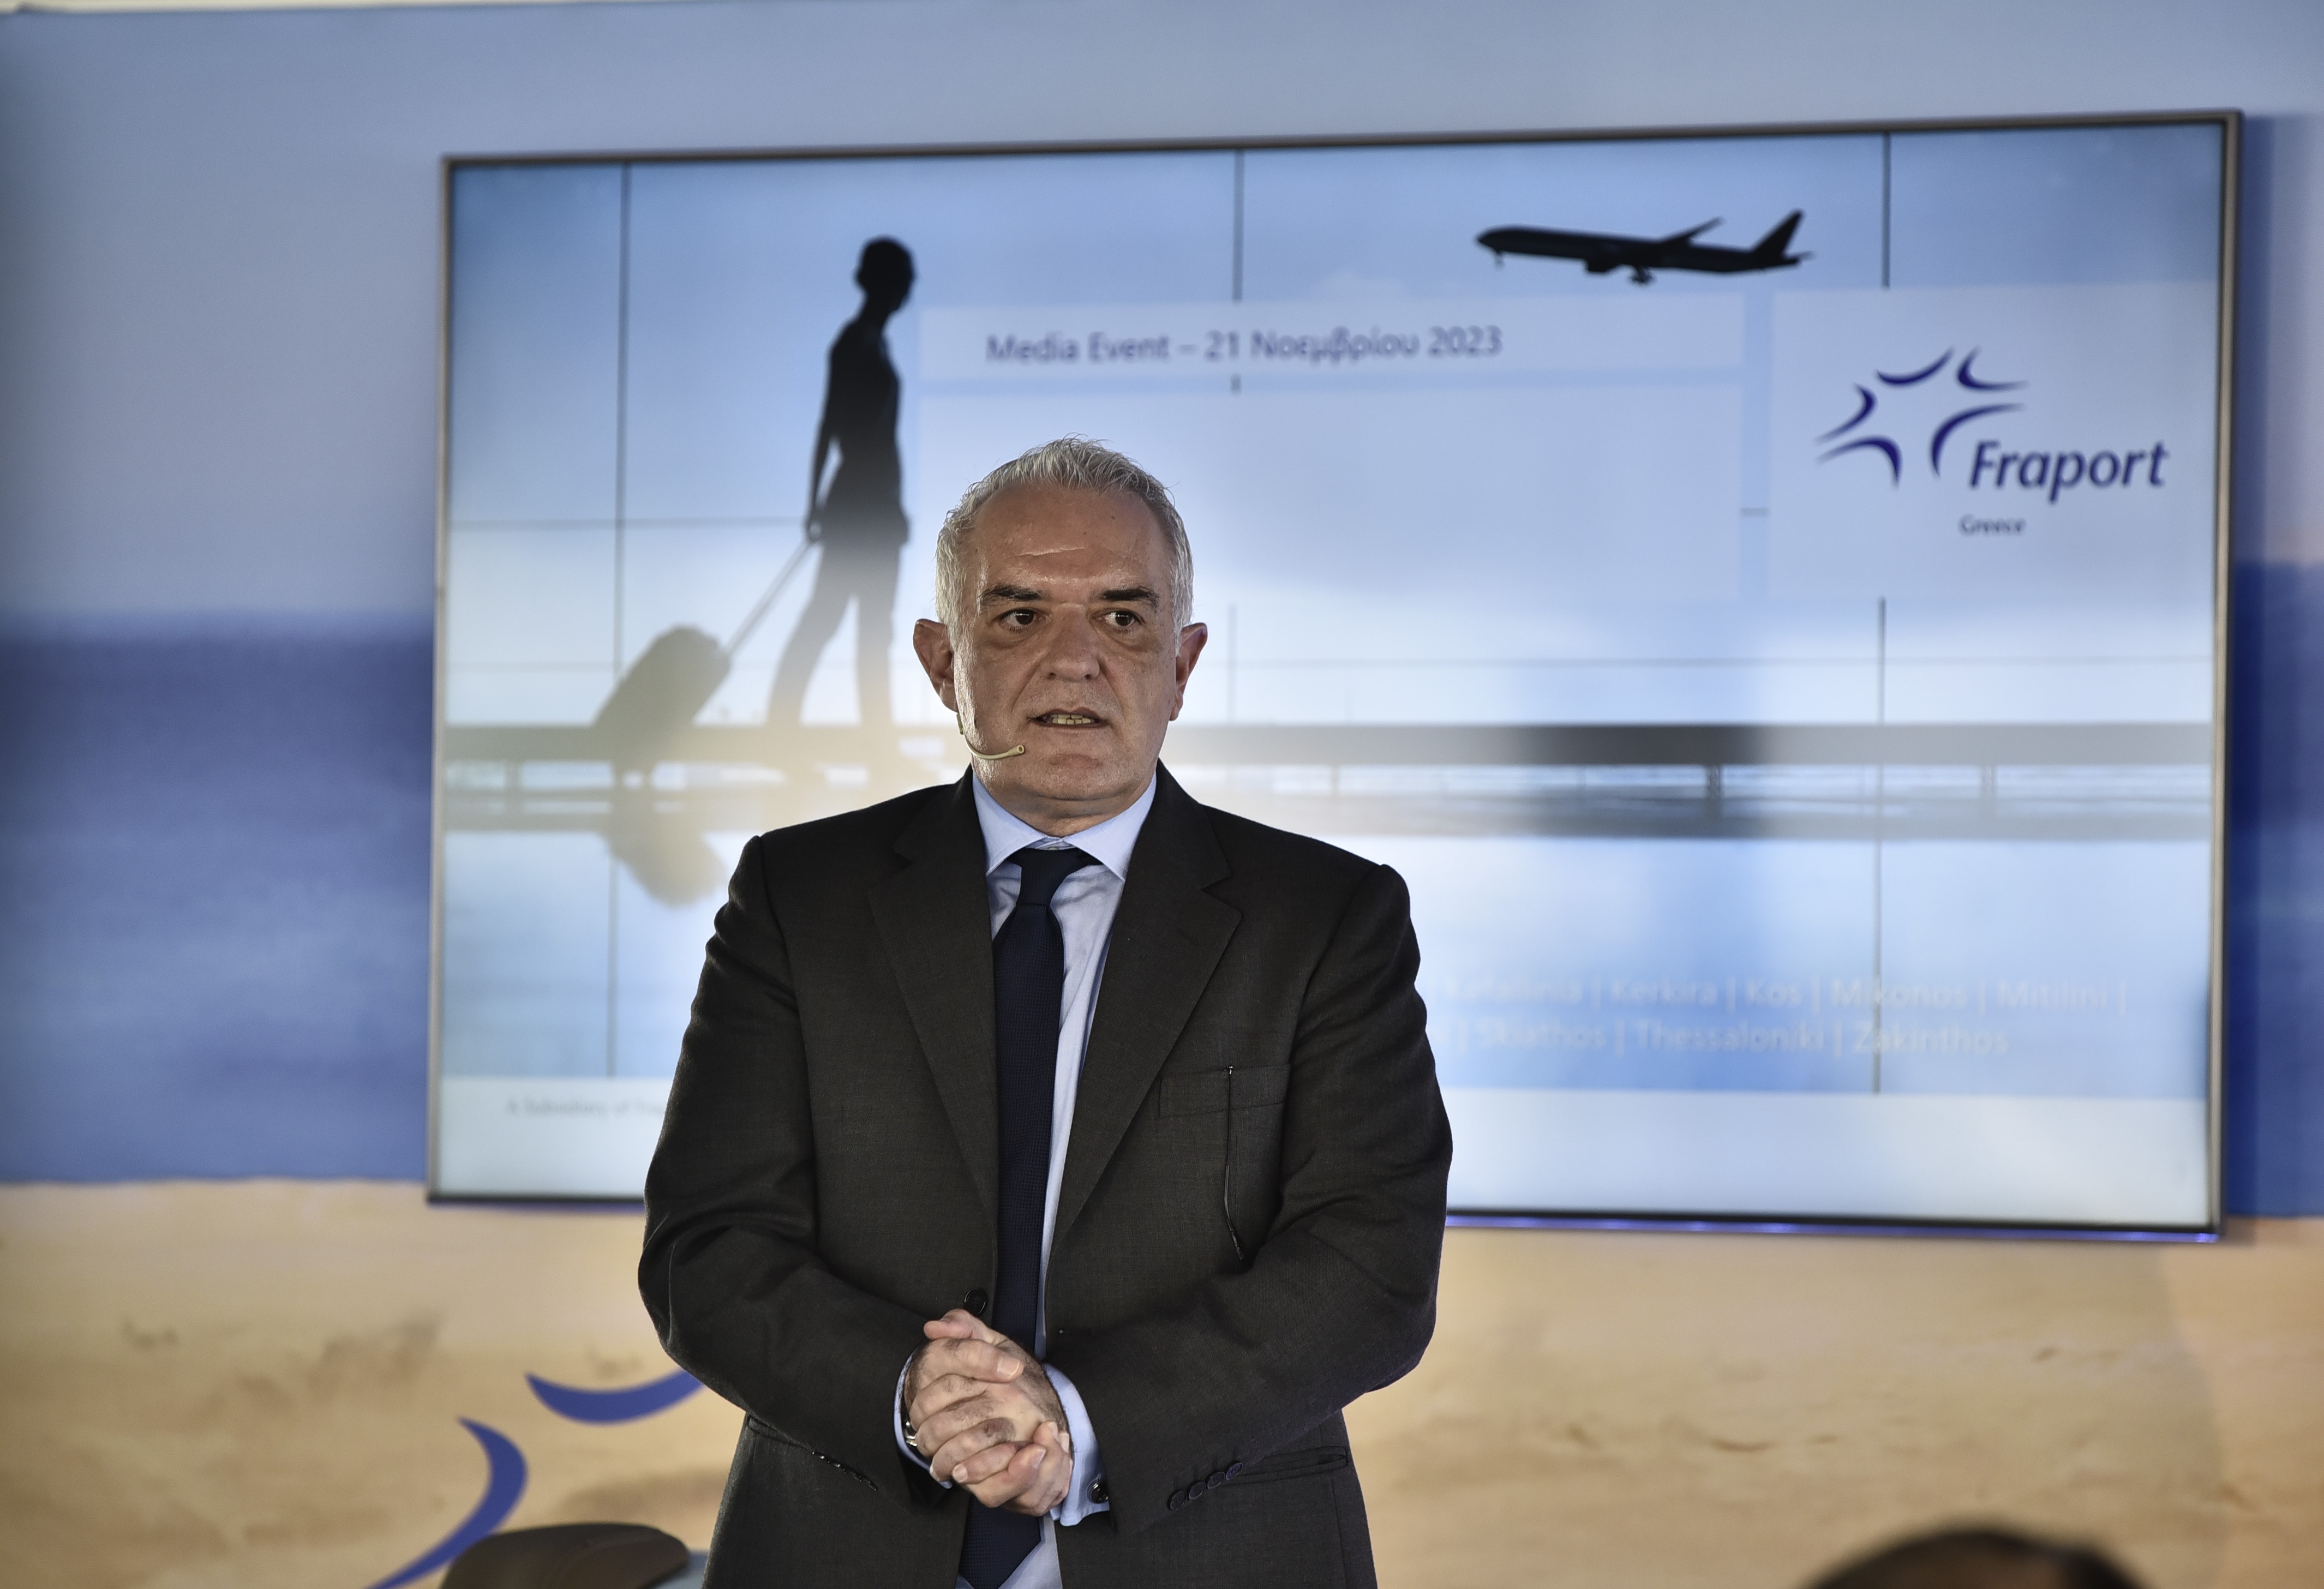 O κ. Σάββας Καραγιάννης, Επικεφαλής Εταιρικής Επικοινωνίας, Fraport Greece